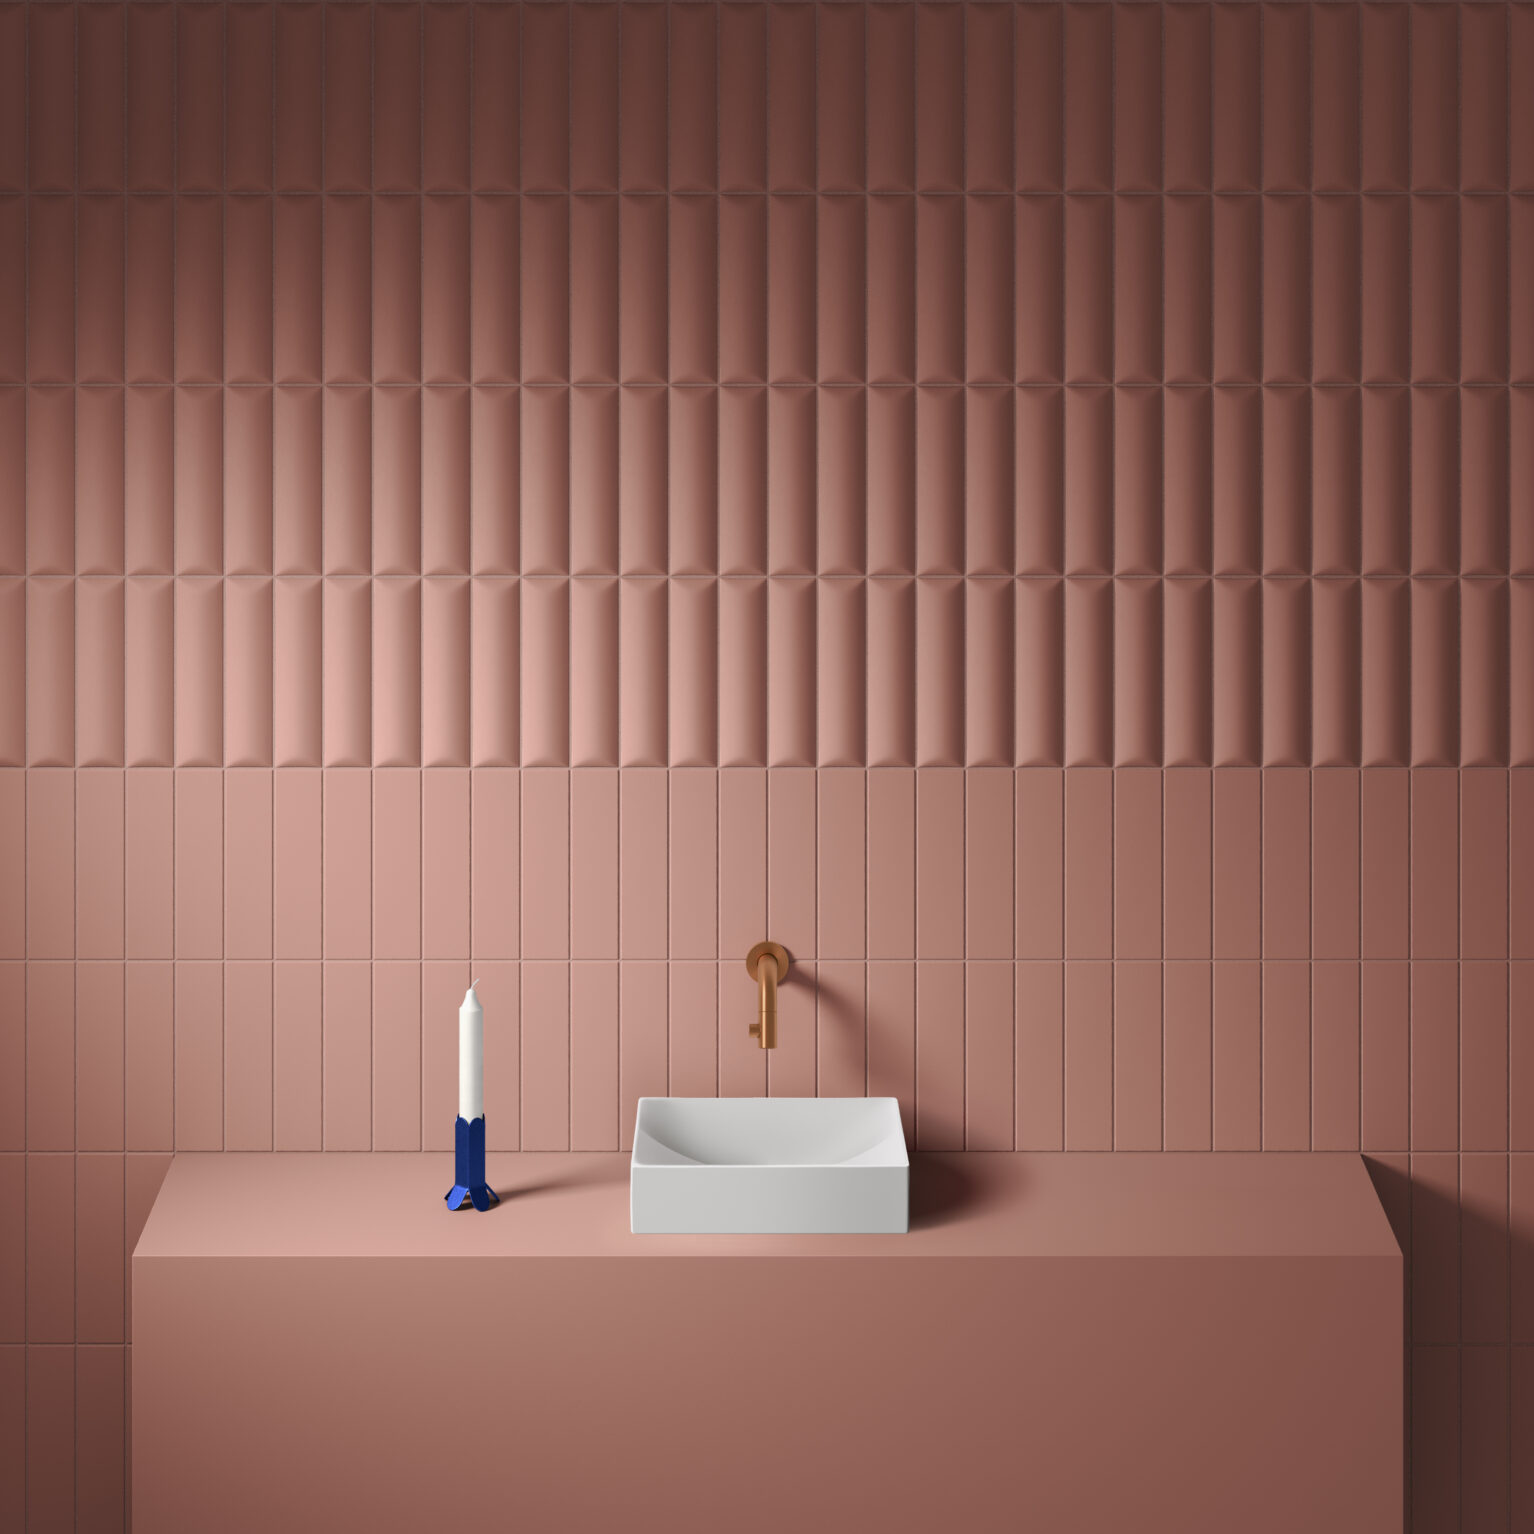 Fontein-wit-toilet-badkamer-luxe-sanitair-clou-CL0302160-mat-keramiek-28cm-Vale-Kaldur-brons-koudwaterkaan-CL060500183-roze-tegels 